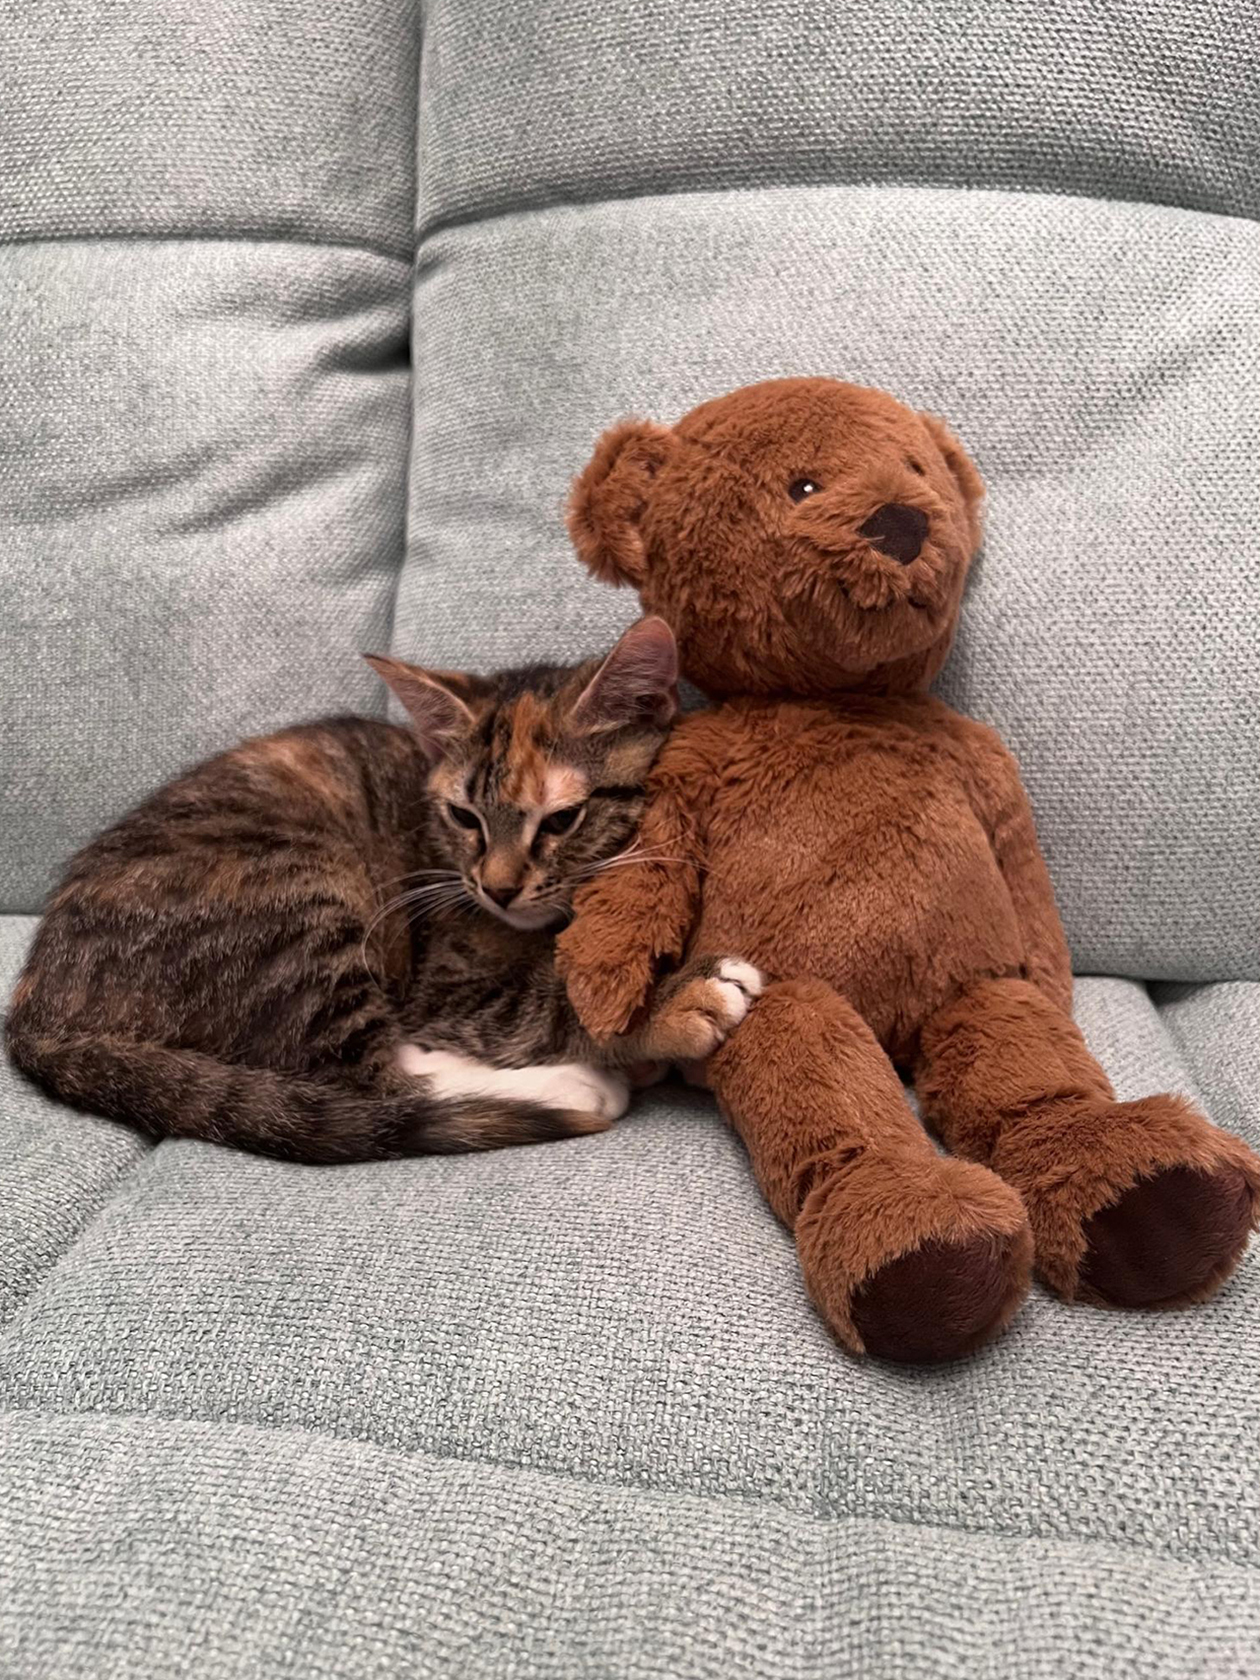 Мой котенок Китти на новом диване и щенок мопса, которого я жду